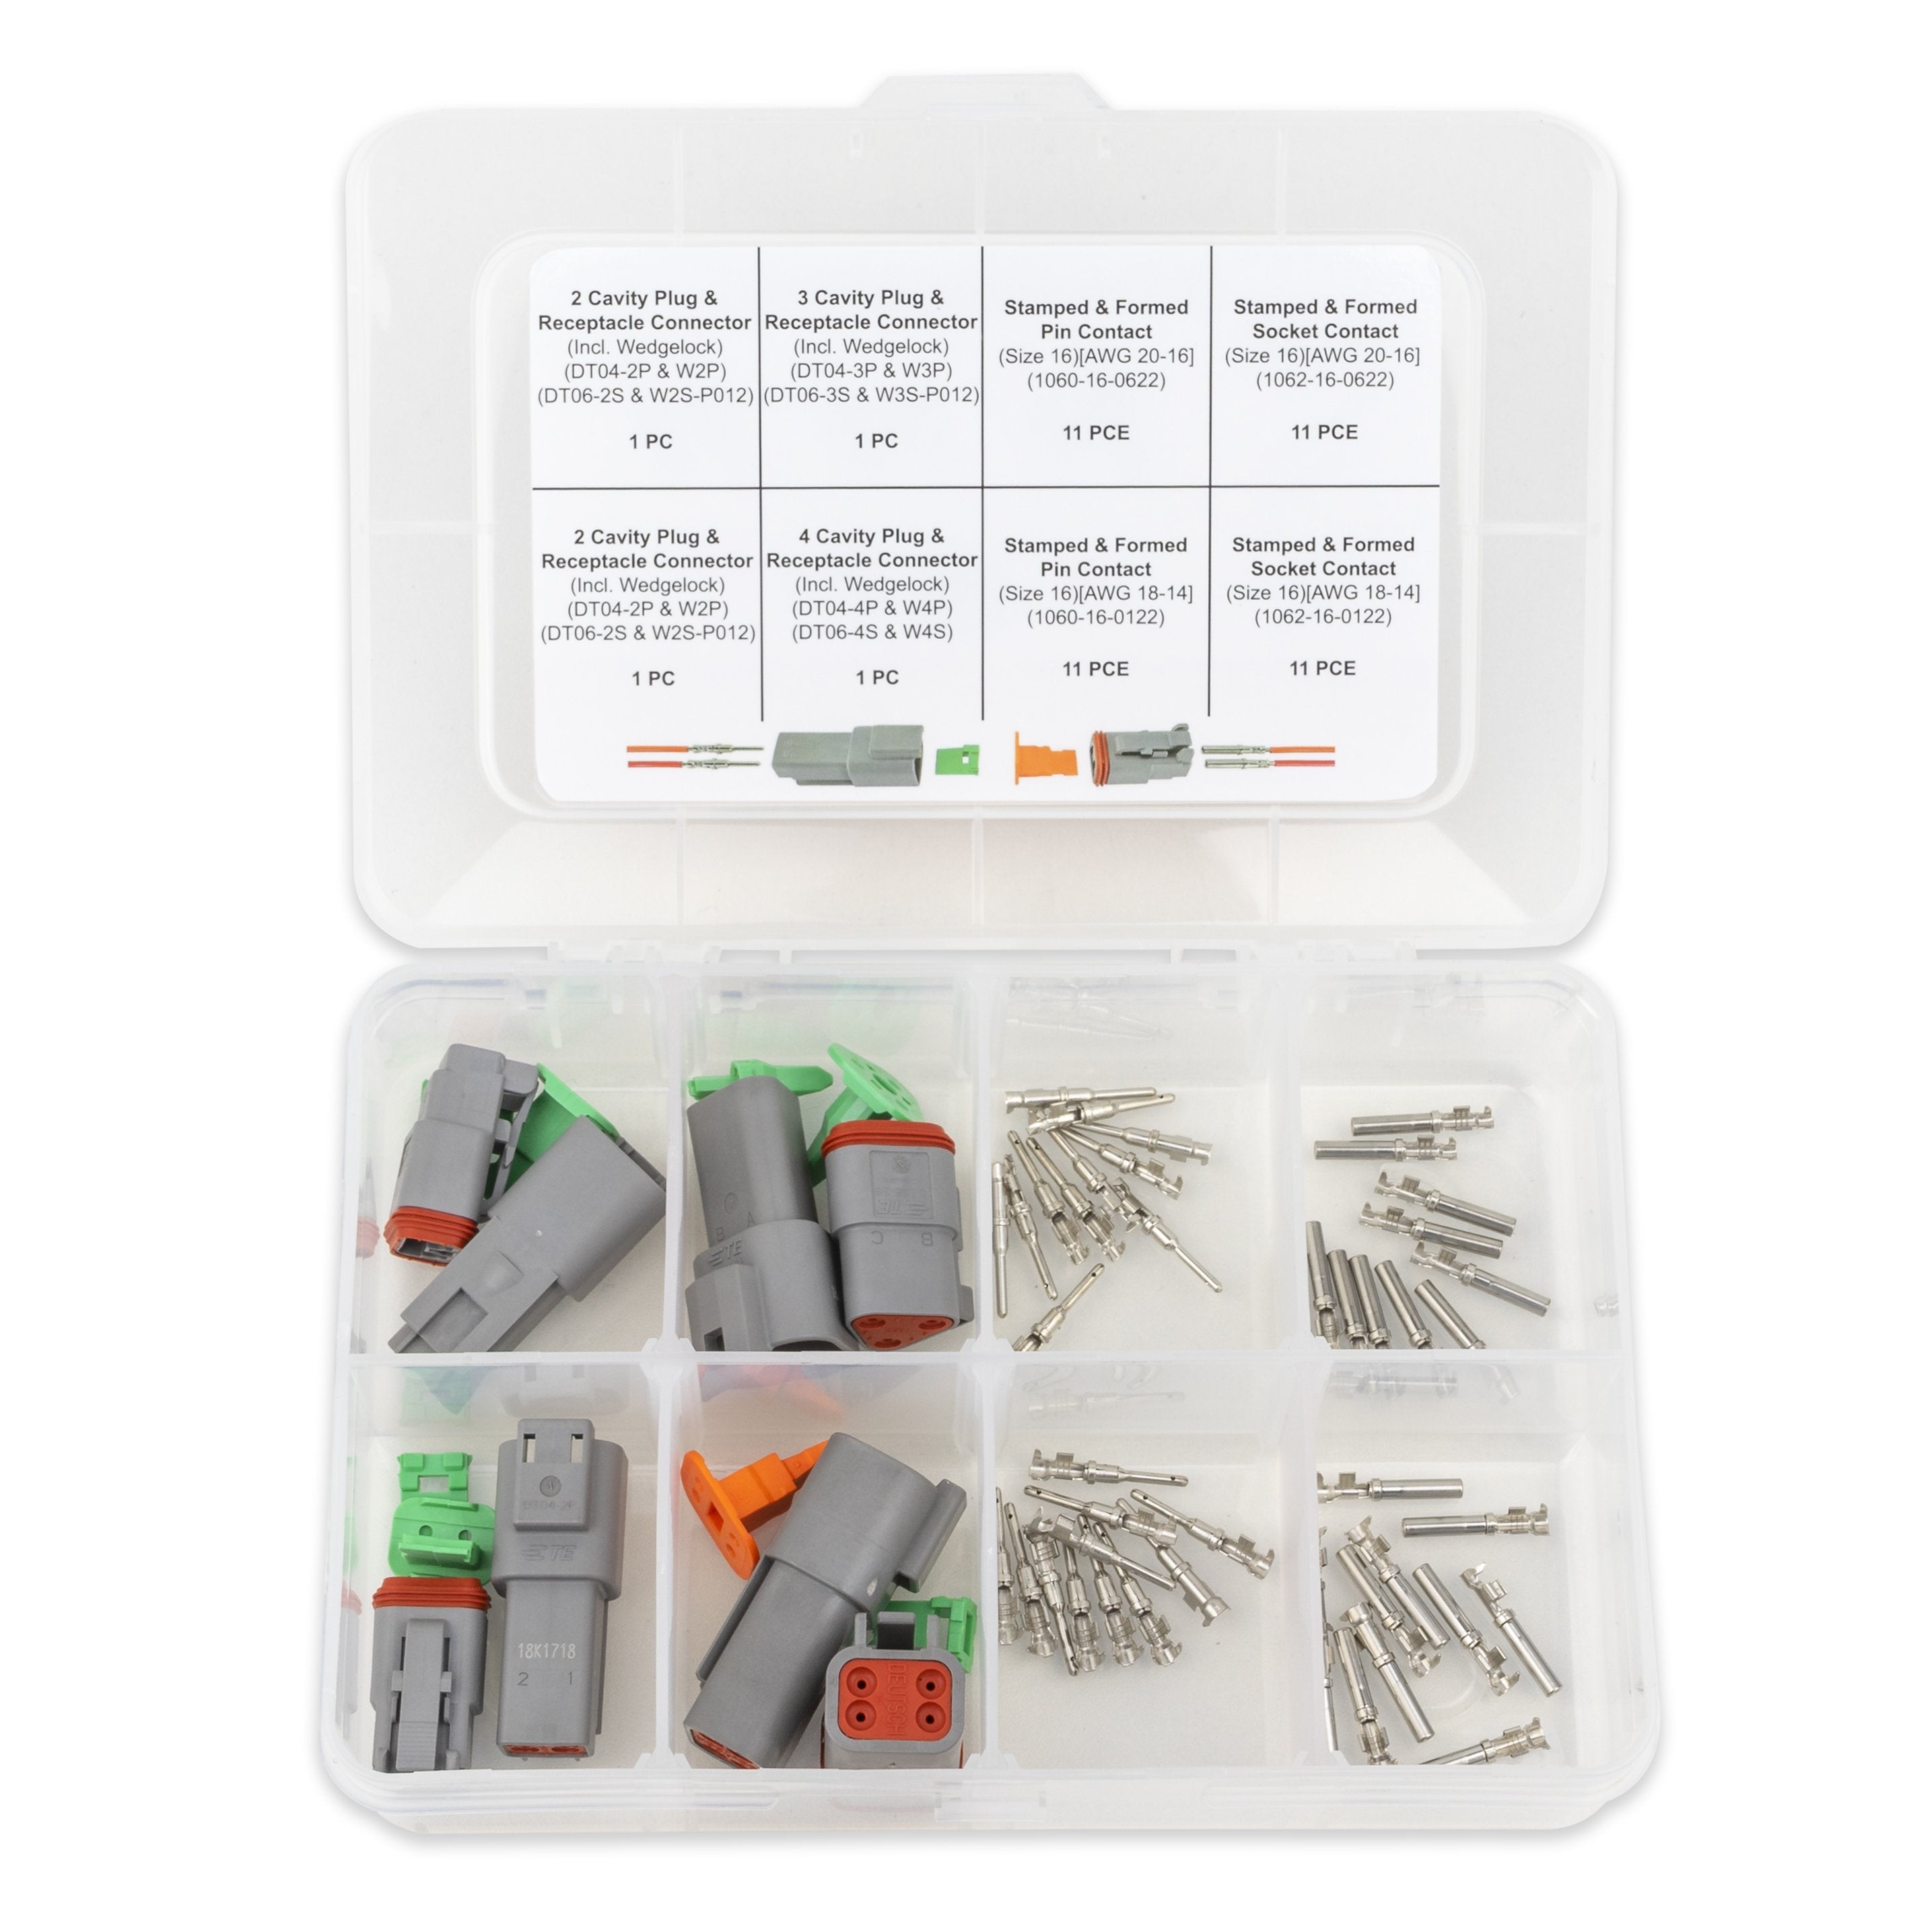 13 pc Deutsch Crimper Kit - Includes Ratcheting Crimper, 7 Dies, Wire Stripper & Removal Tools PLUS 52pc Deutsch DT Connector Kit